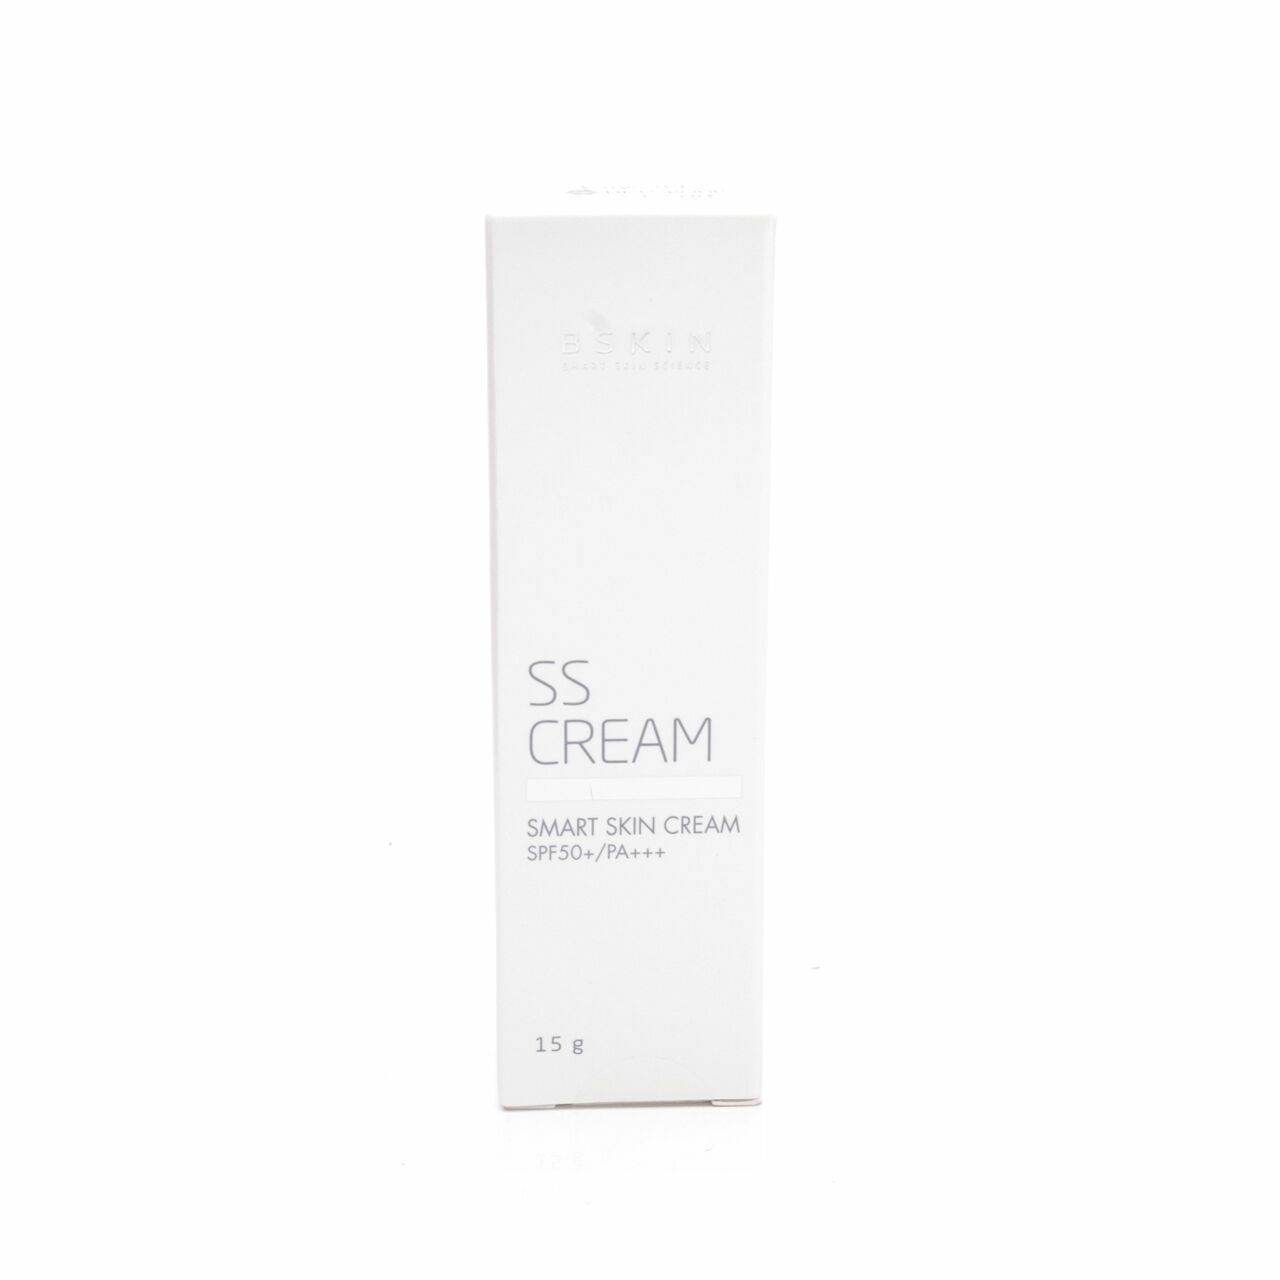 BSKIN SS Cream Smart Skin Cream SPF 50+/PA+++ Faces